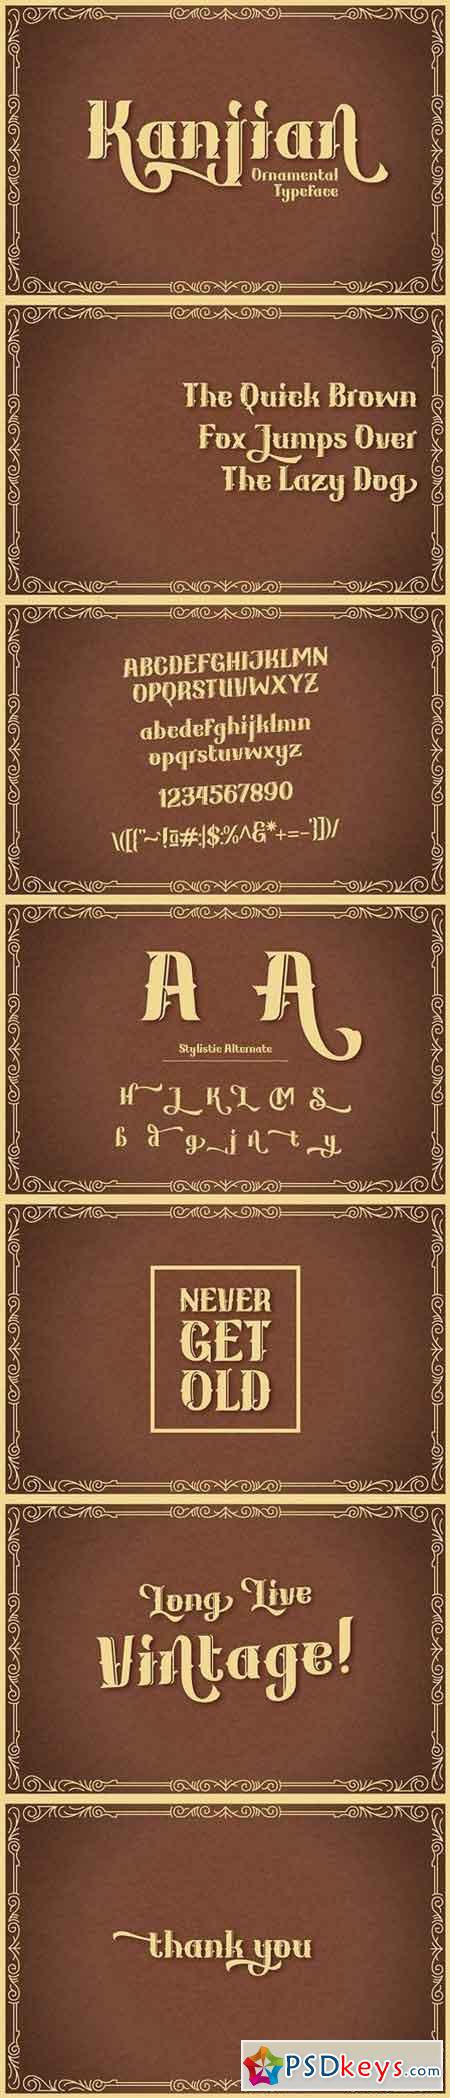 Kanjian Typeface 1201351